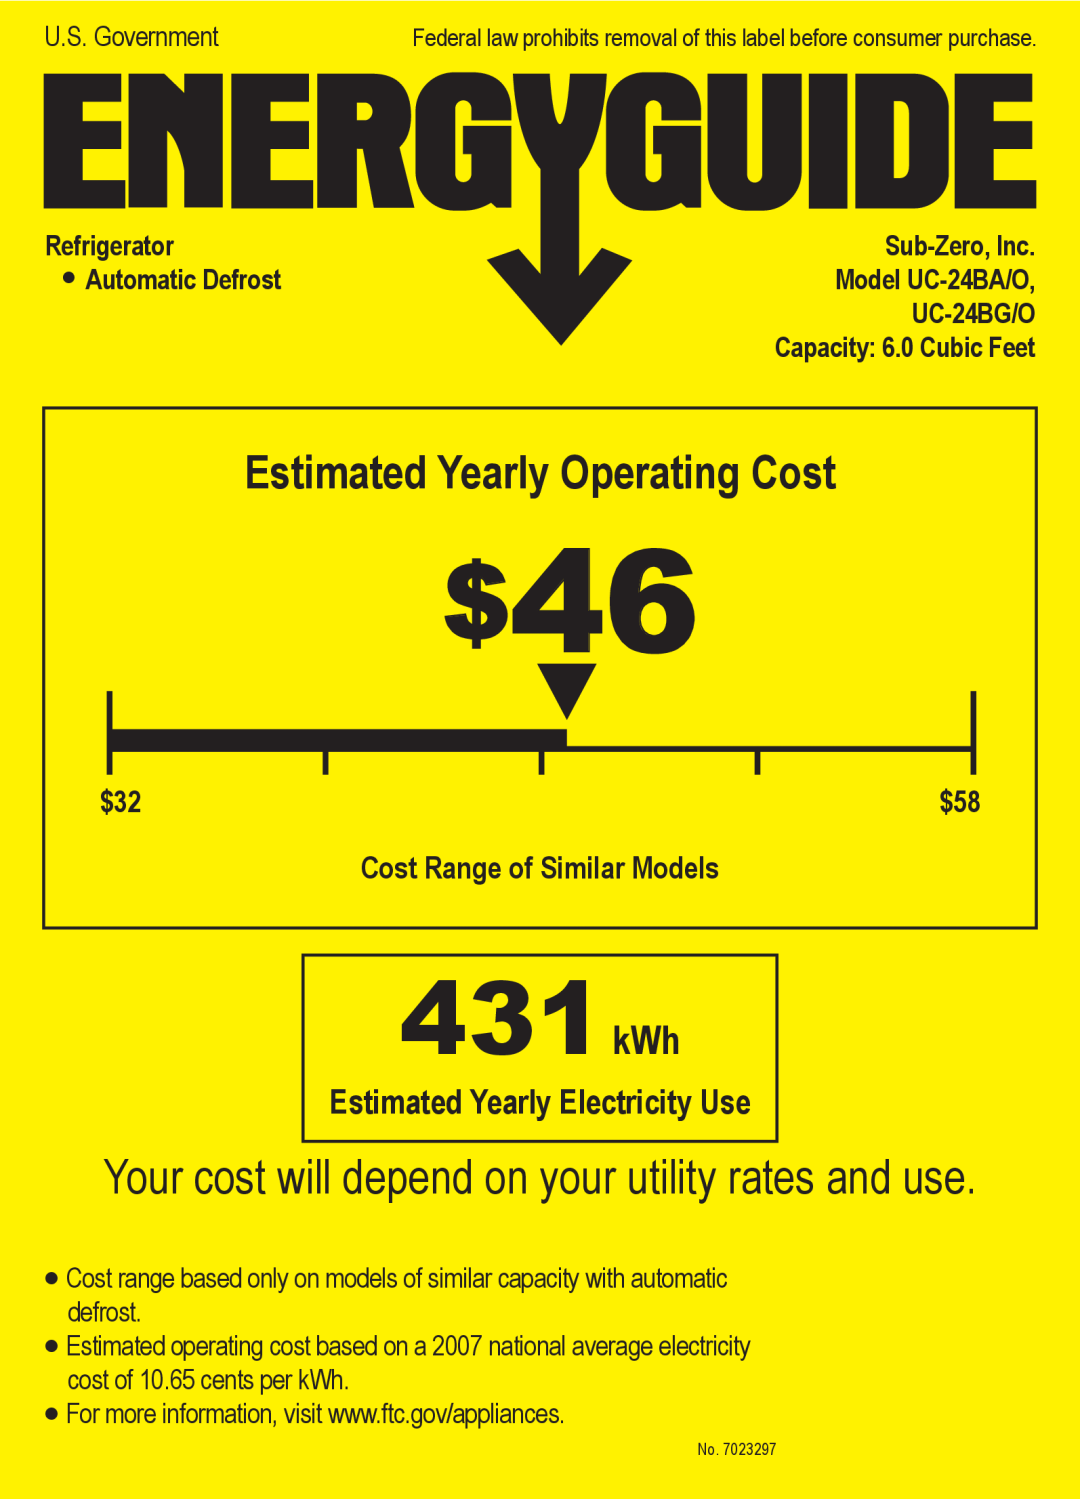 Sub-Zero UC-24BA/O manual 431kWh, Estimated Yearly Operating Cost, Estimated Yearly Electricity Use, Refrigerator 